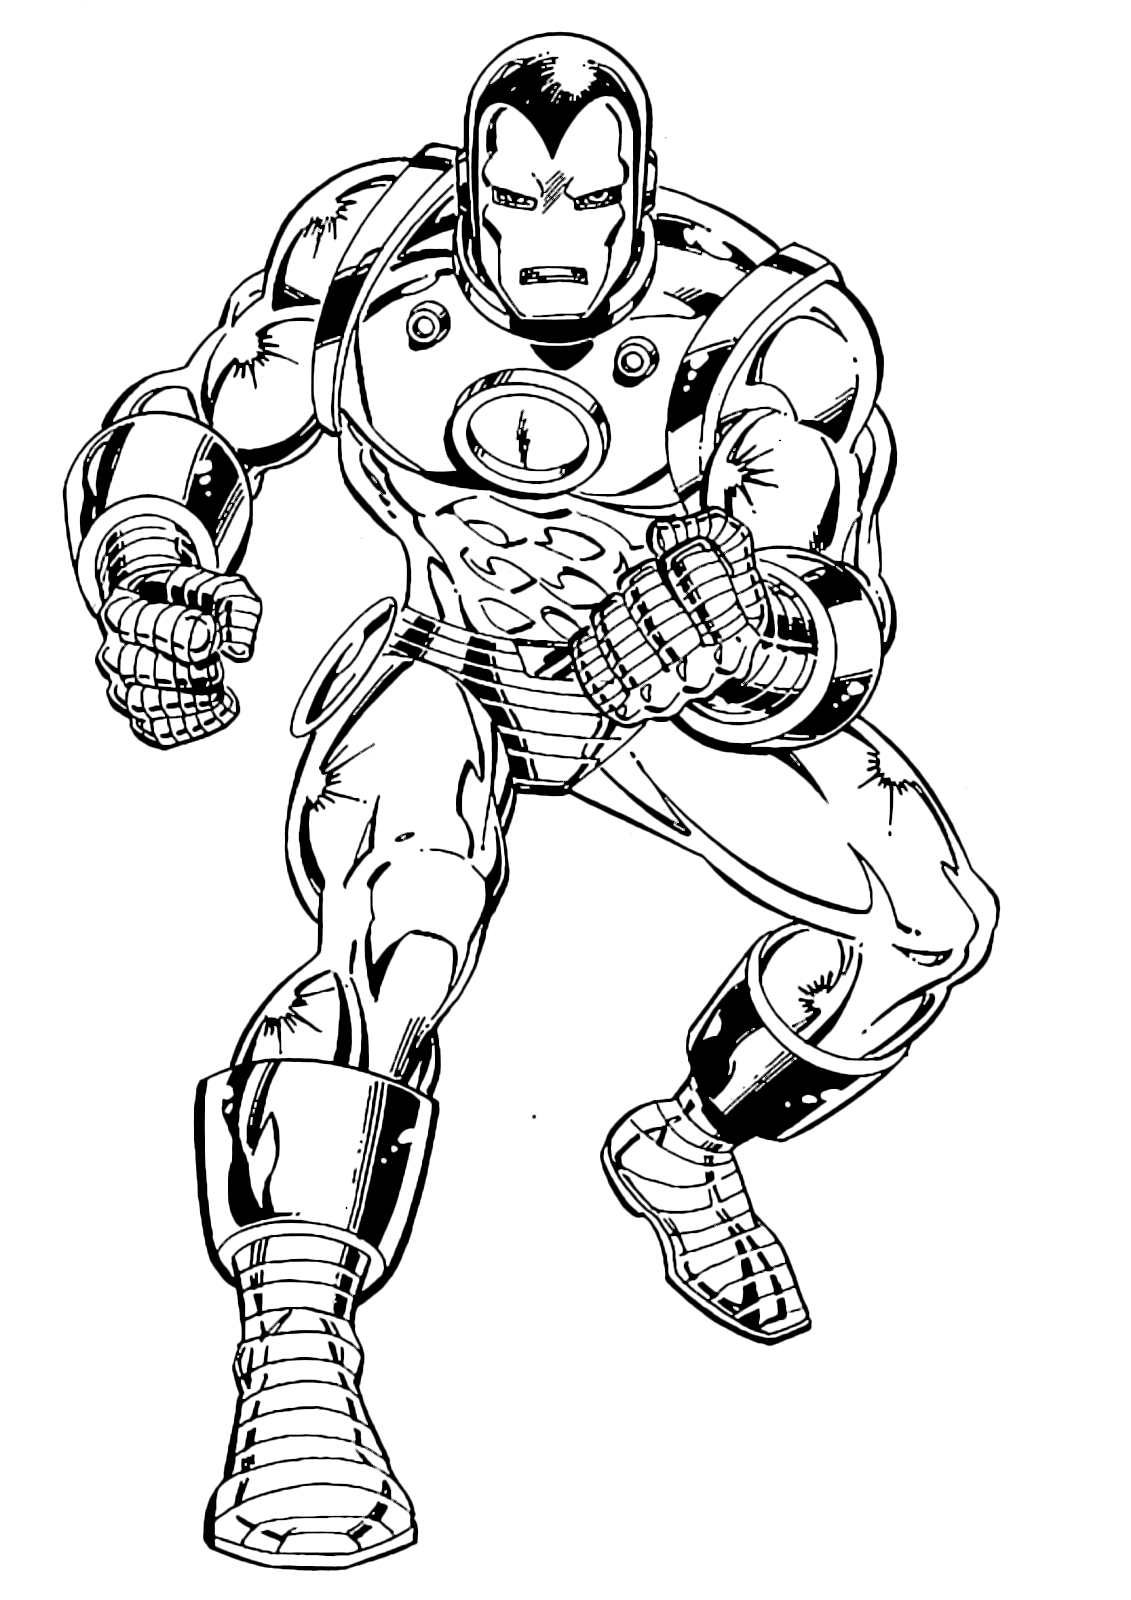 Iron Man - Iron Man ready to launch an iron fist